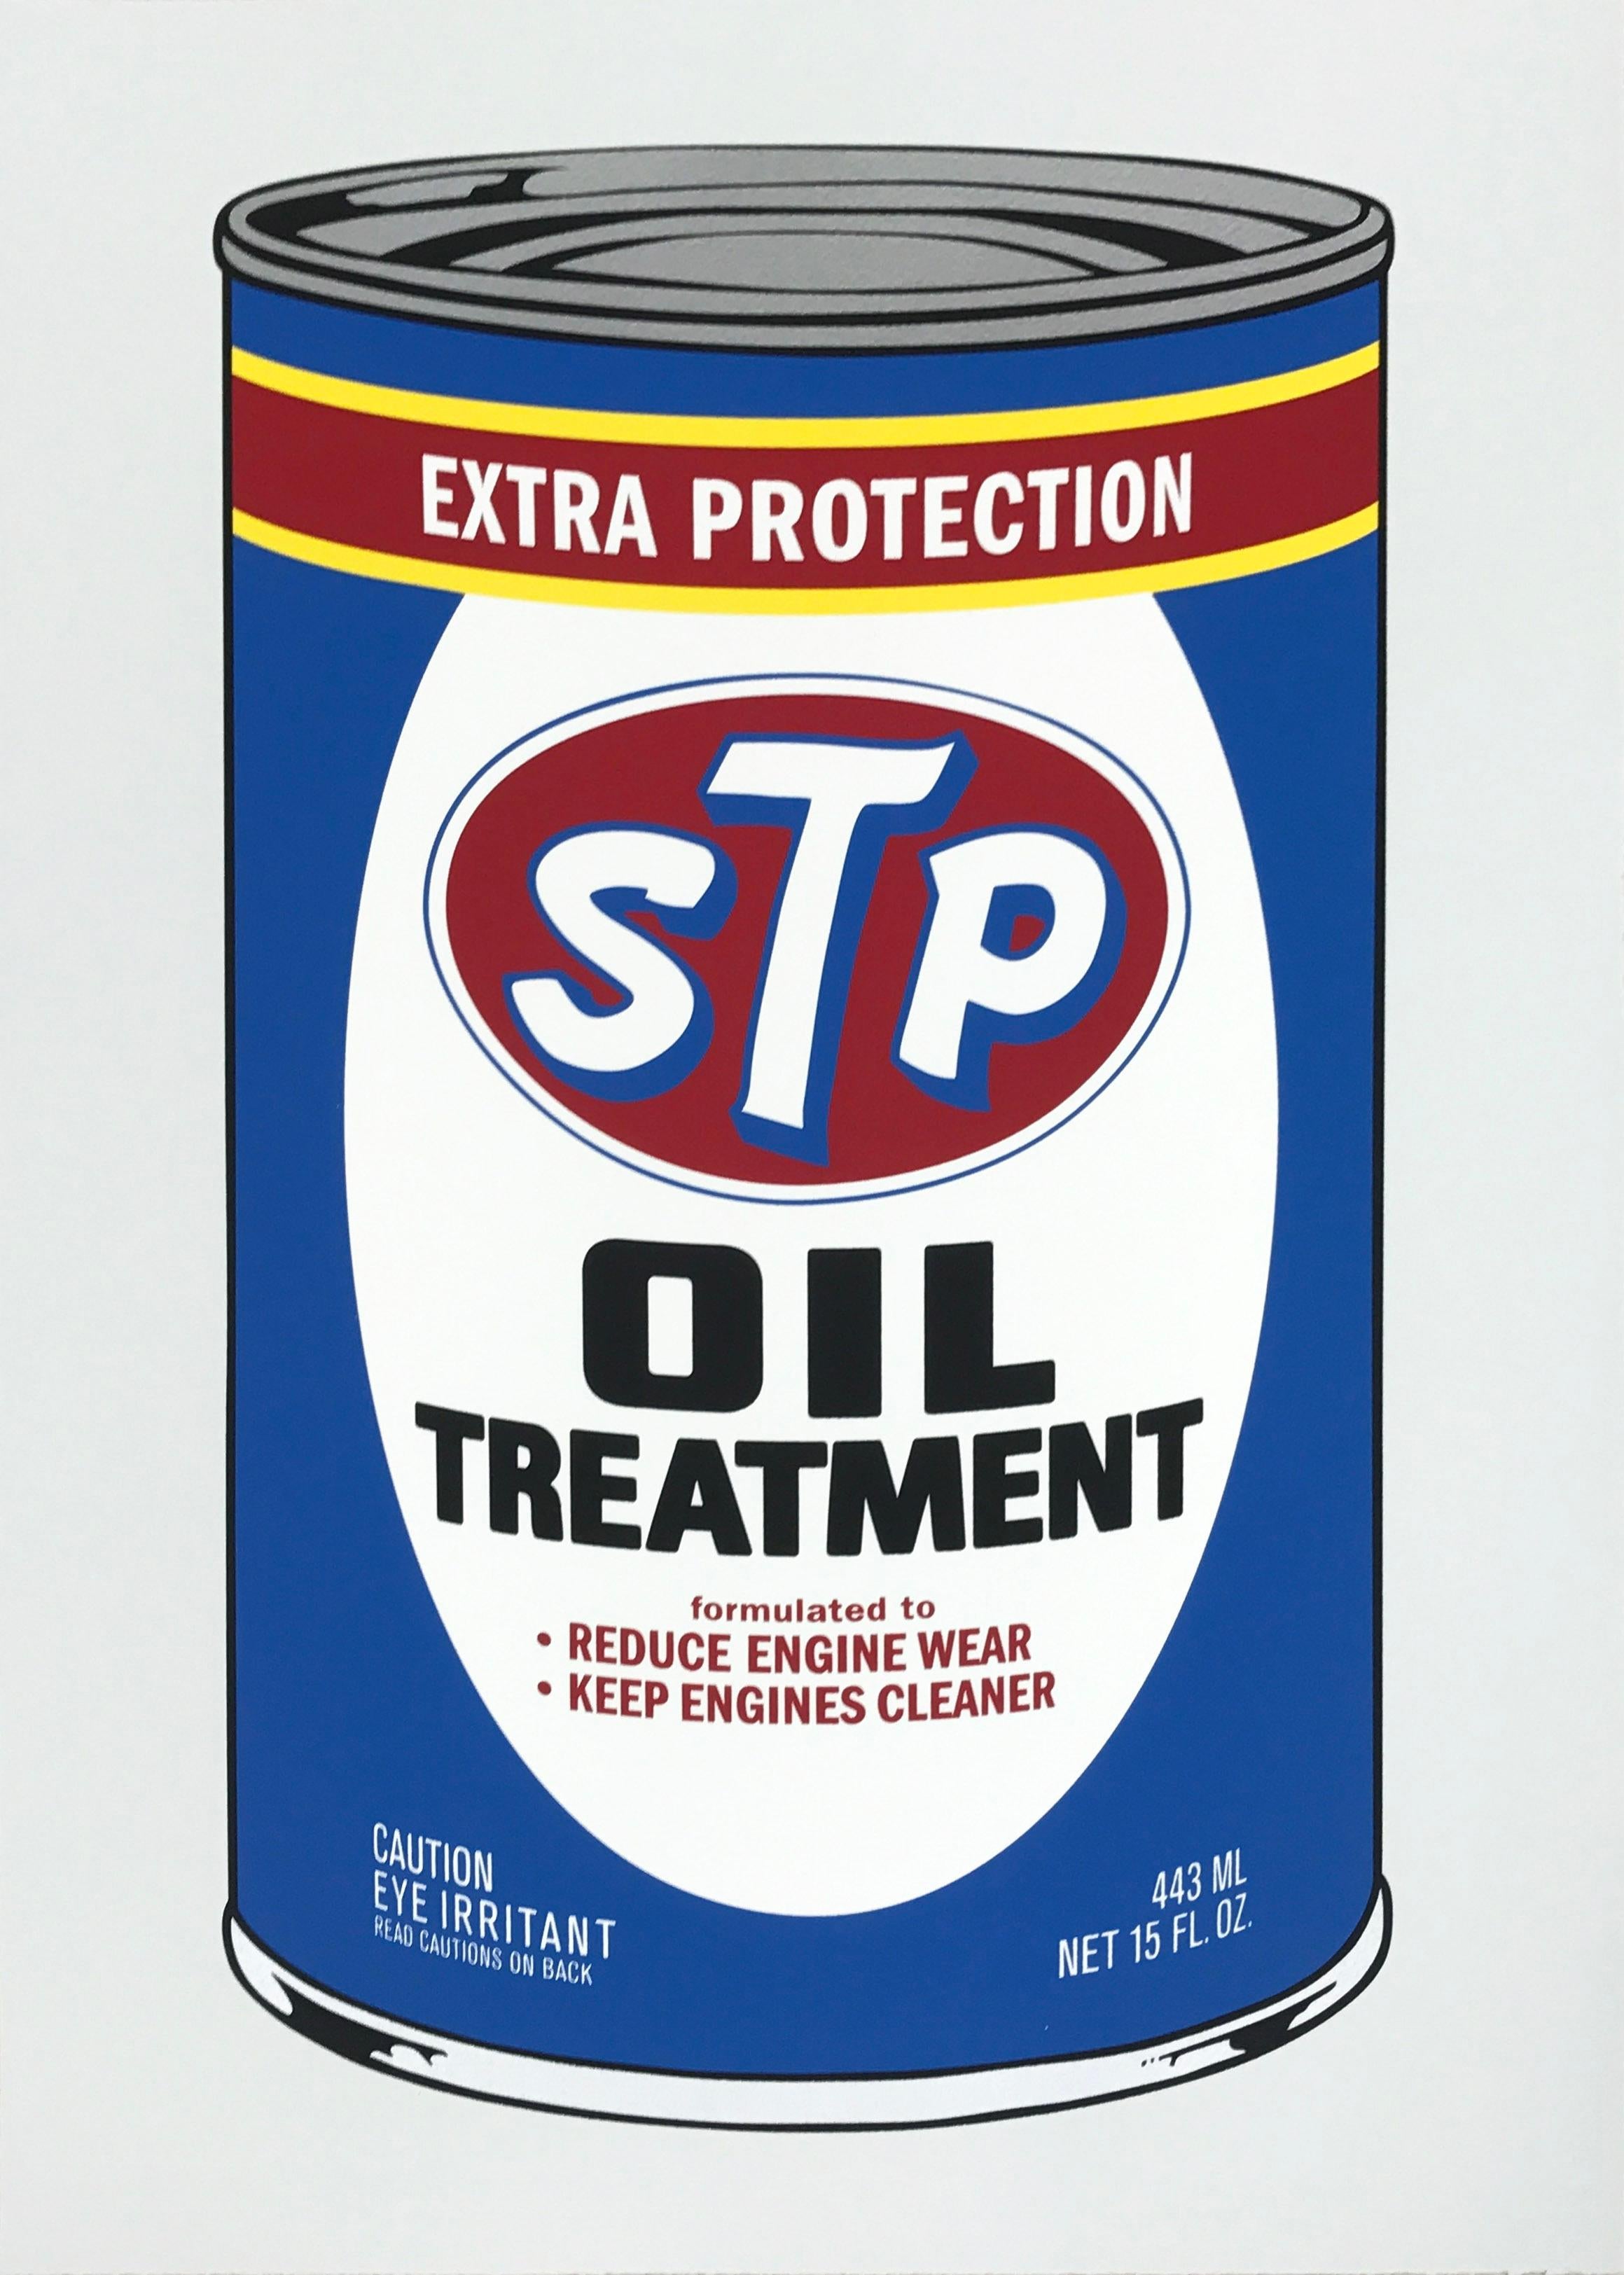 STP Oil Treatment - Print by Heiner Meyer